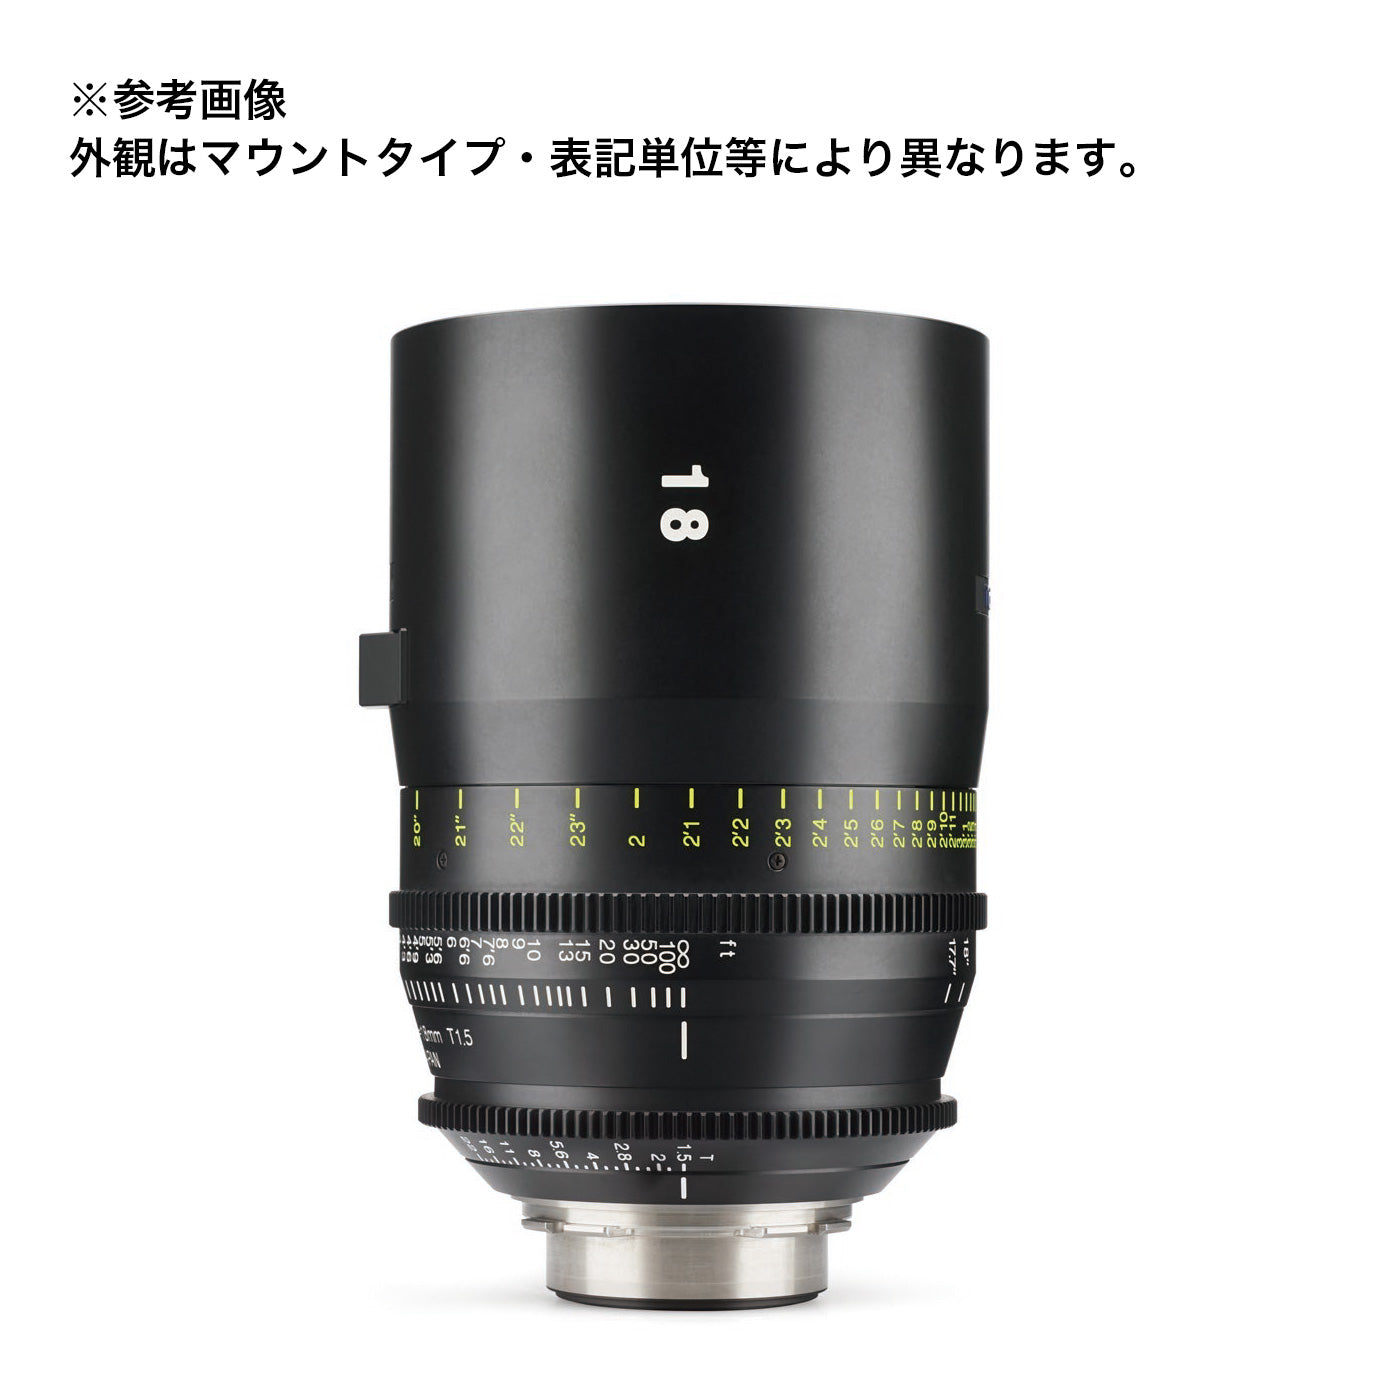 Tokina Cinema Prime Lens VISTA 18mm T1.5 CINEMA LENS Micro Four Thirds Mount Metric [264147]